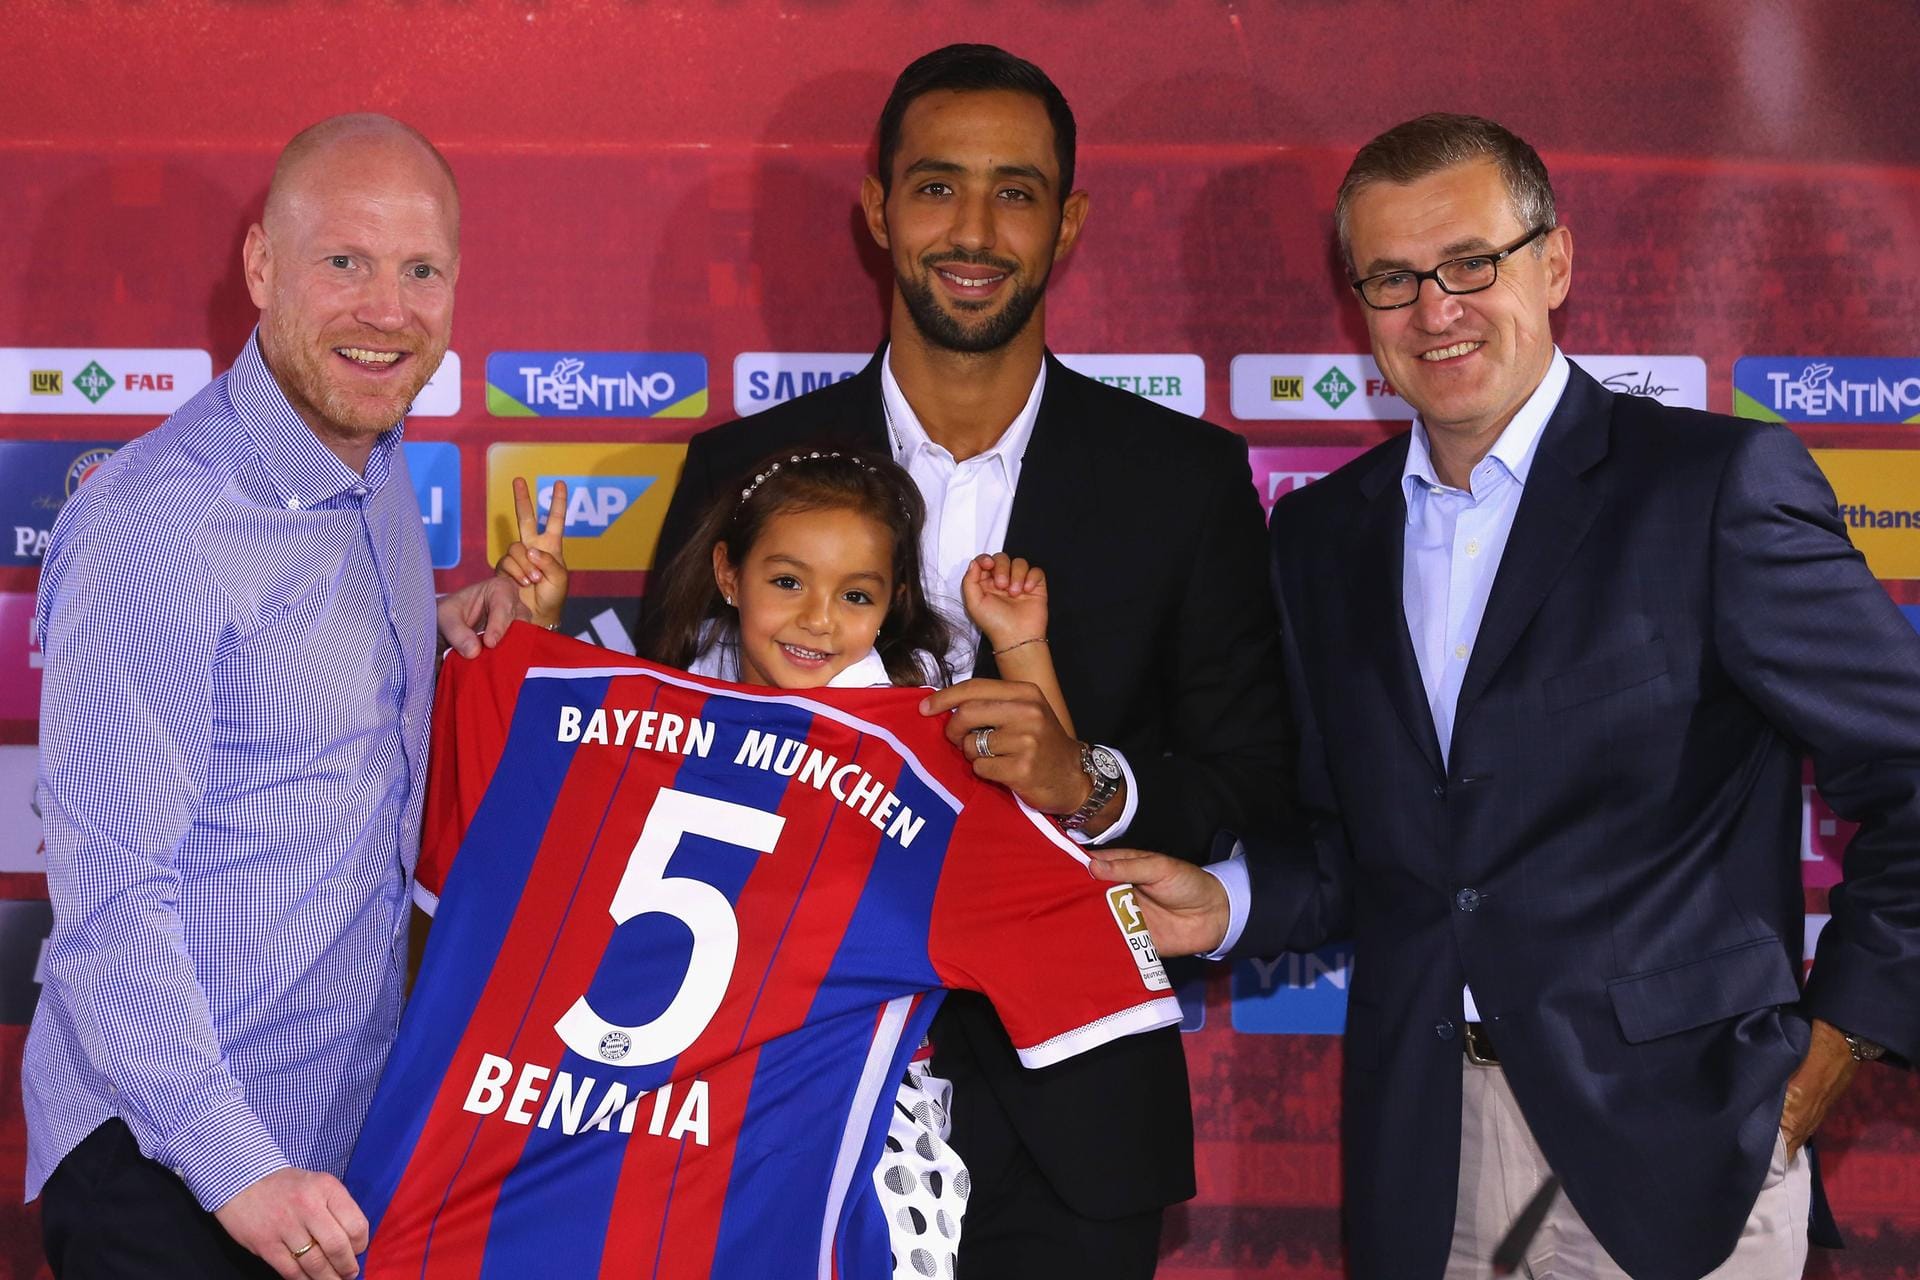 Mehdi Benatia (Mitte): Transferdatum: 27. August 2014. Ablöse: 28 Millionen Euro. Abgebender Verein: AS Rom.